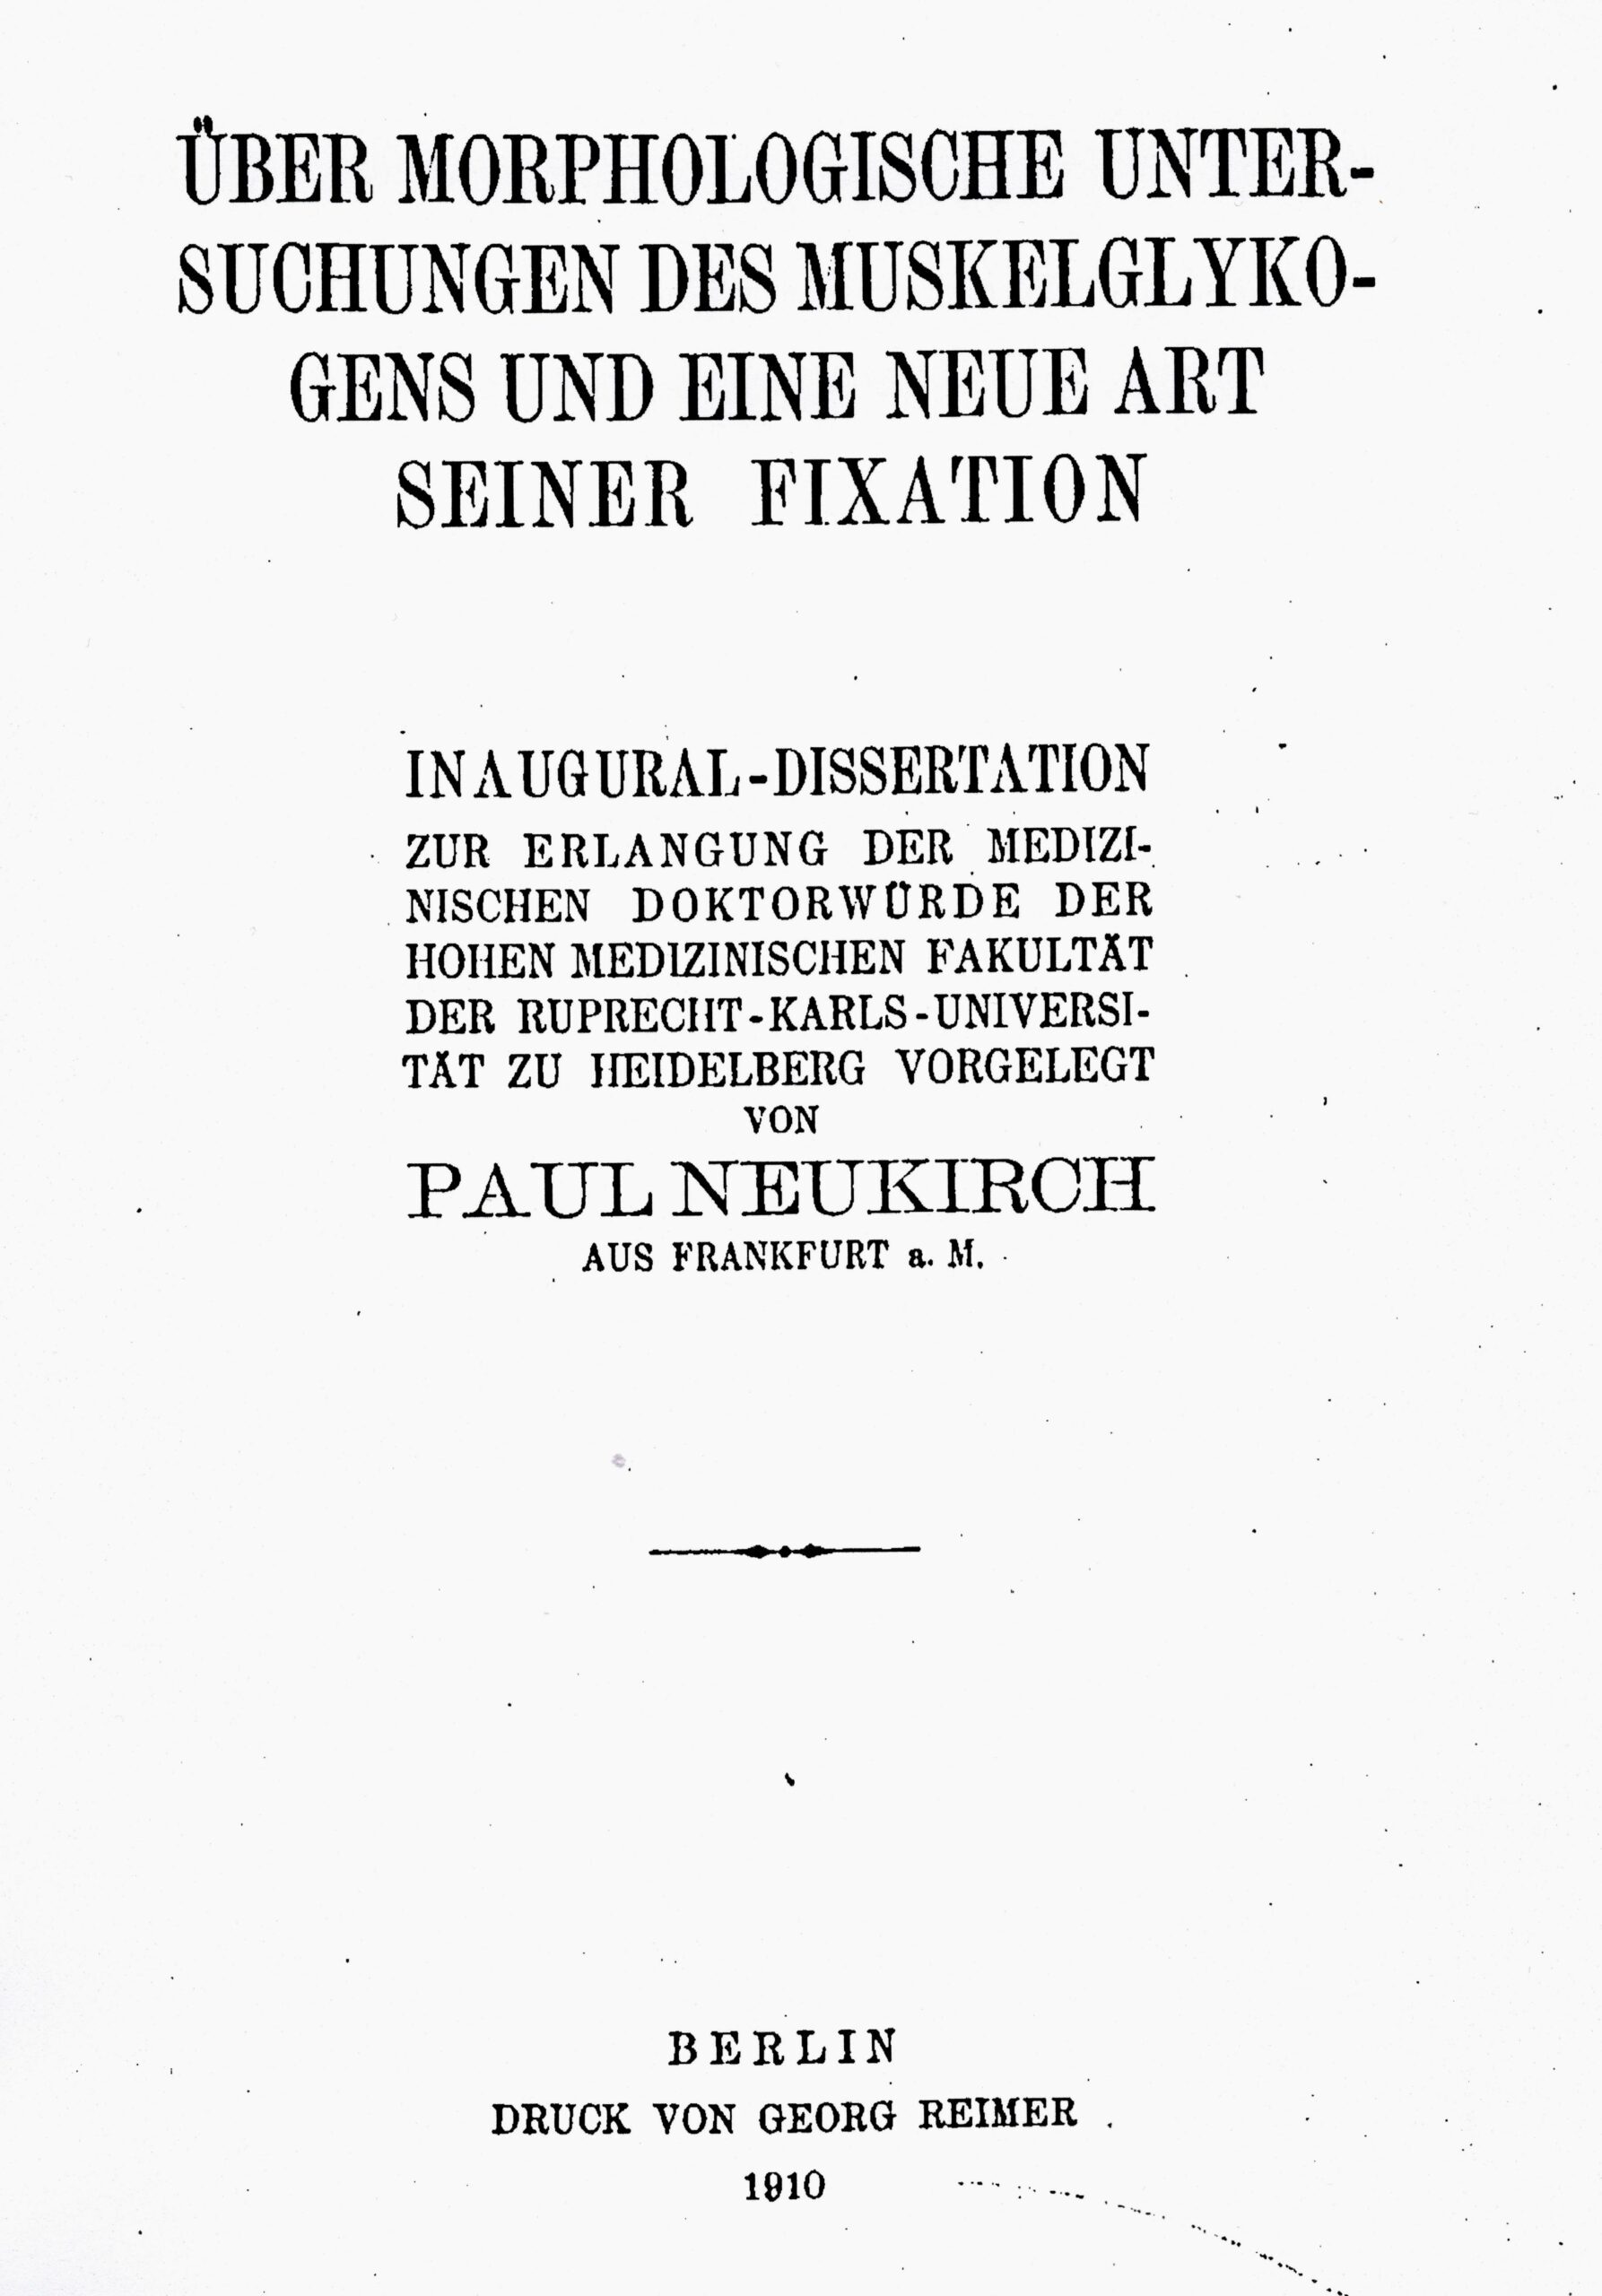 Dissertation, Heidelberg 1910